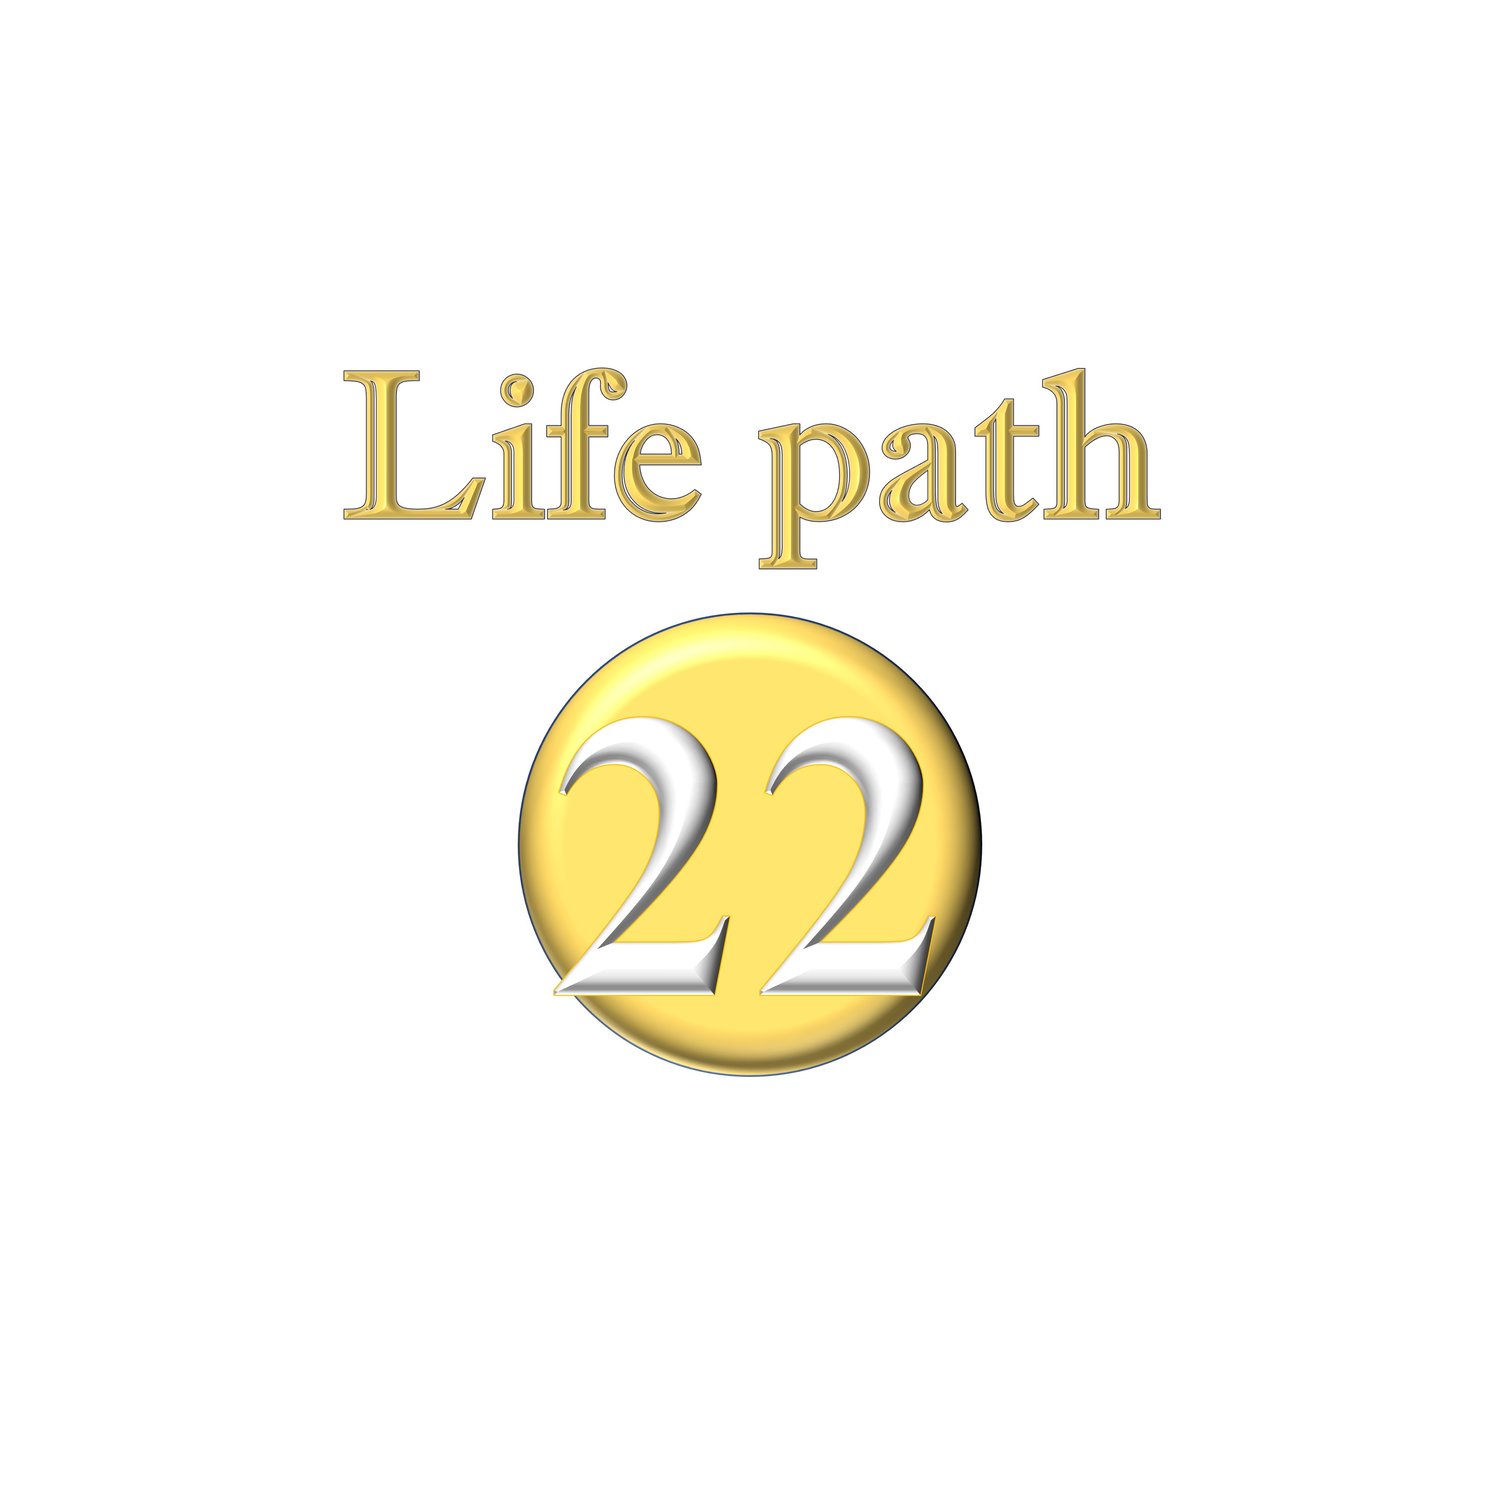 Life path 22